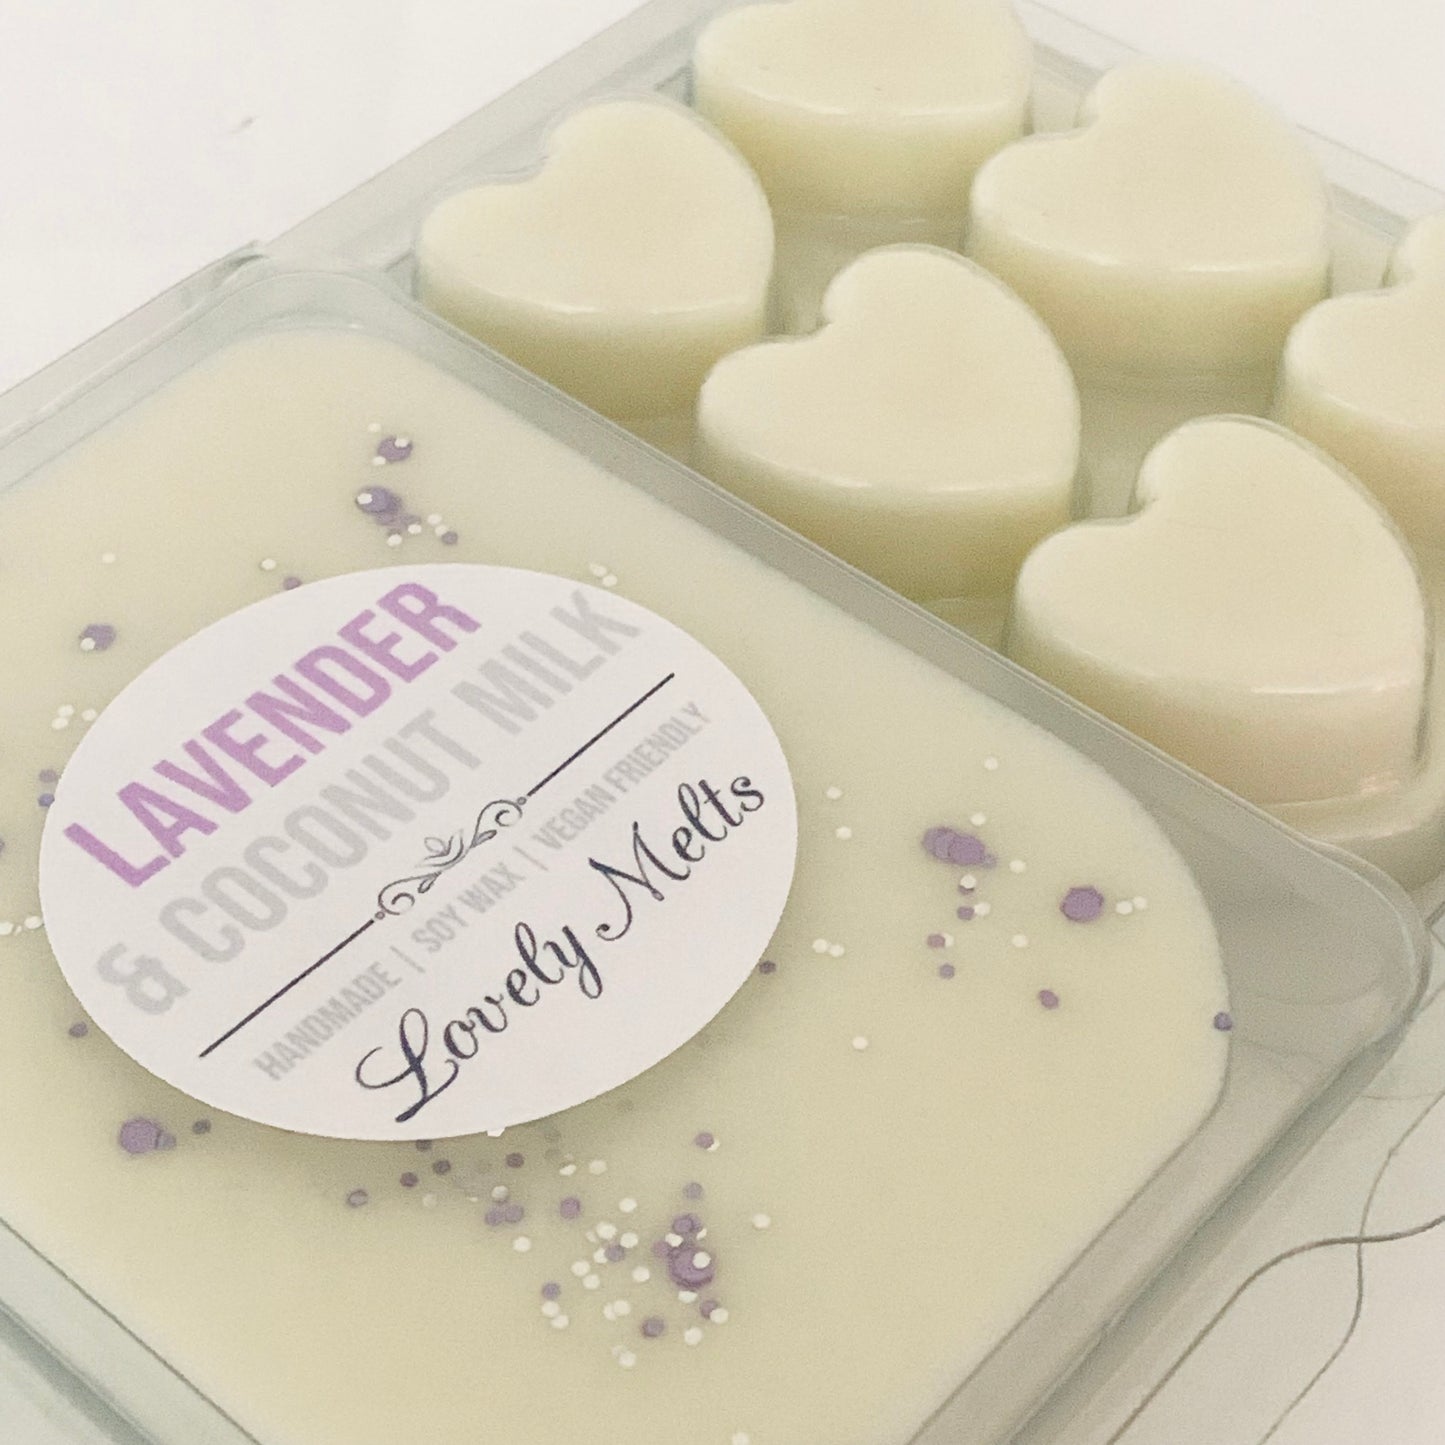 lavender and coconut milk wax melt bars